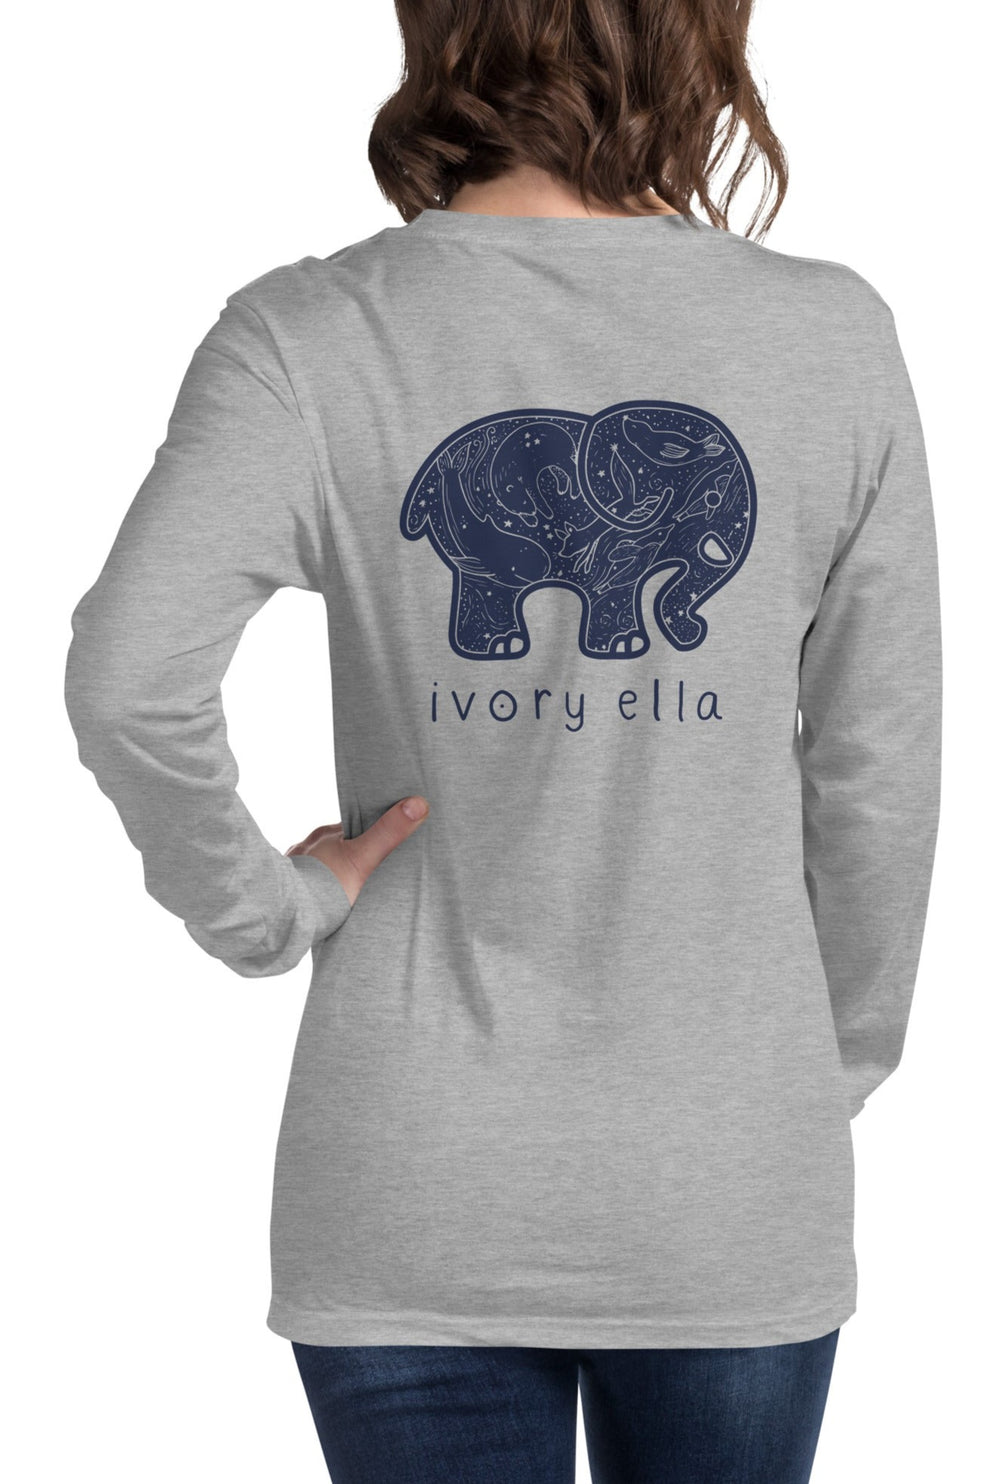 Sleeve Ella Night Long Sky Unisex – Ivory T-Shirt